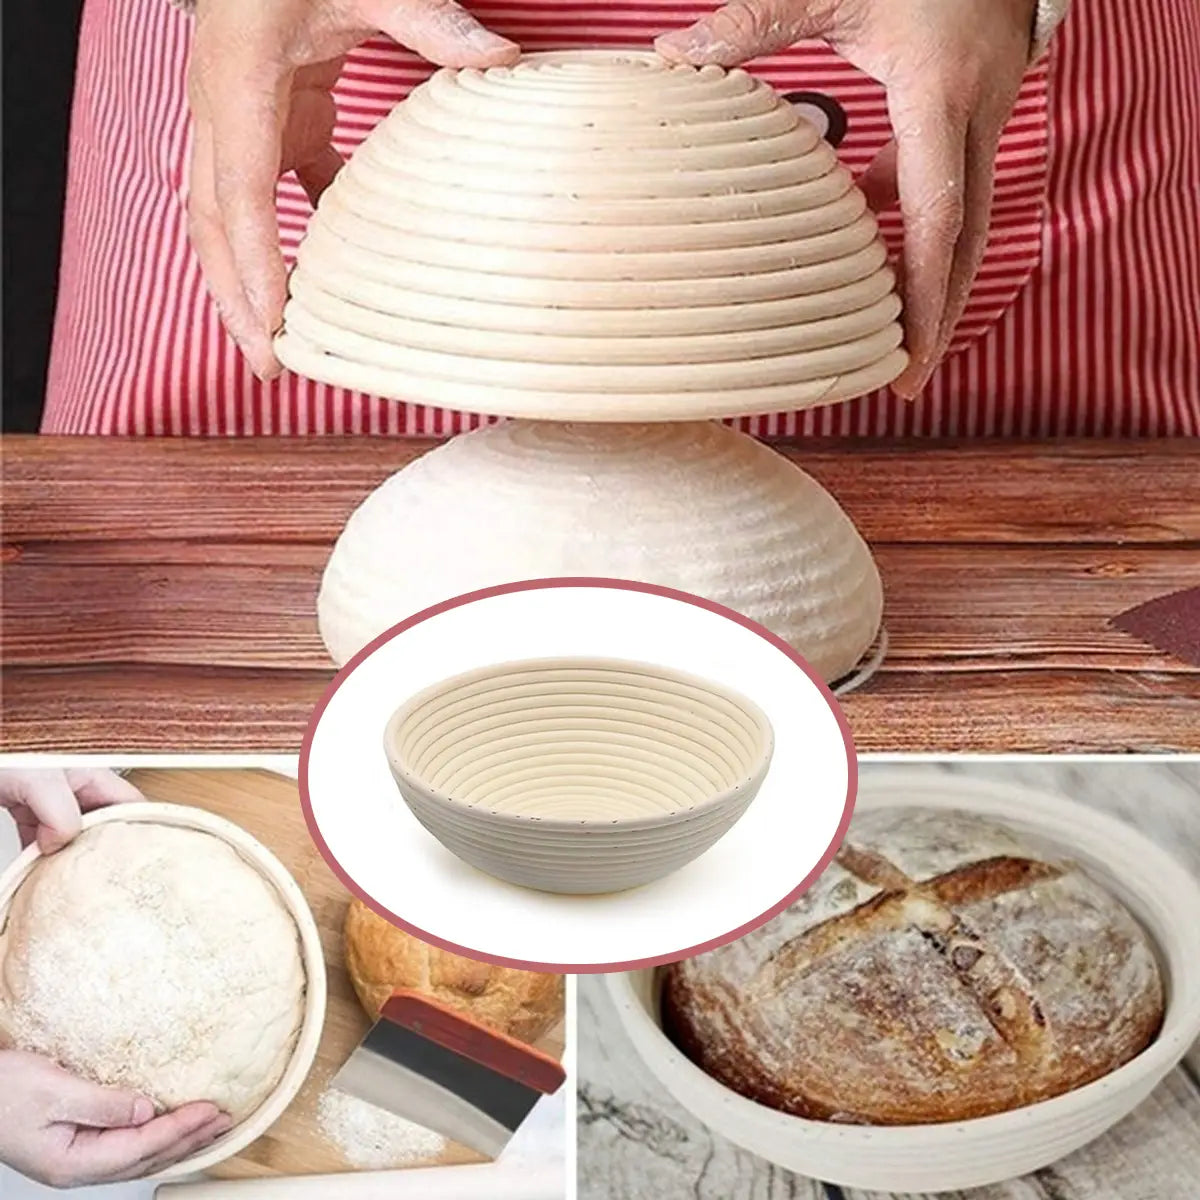 Bread Baking Tool Kits 9 Inch Banneton Proofing Basket